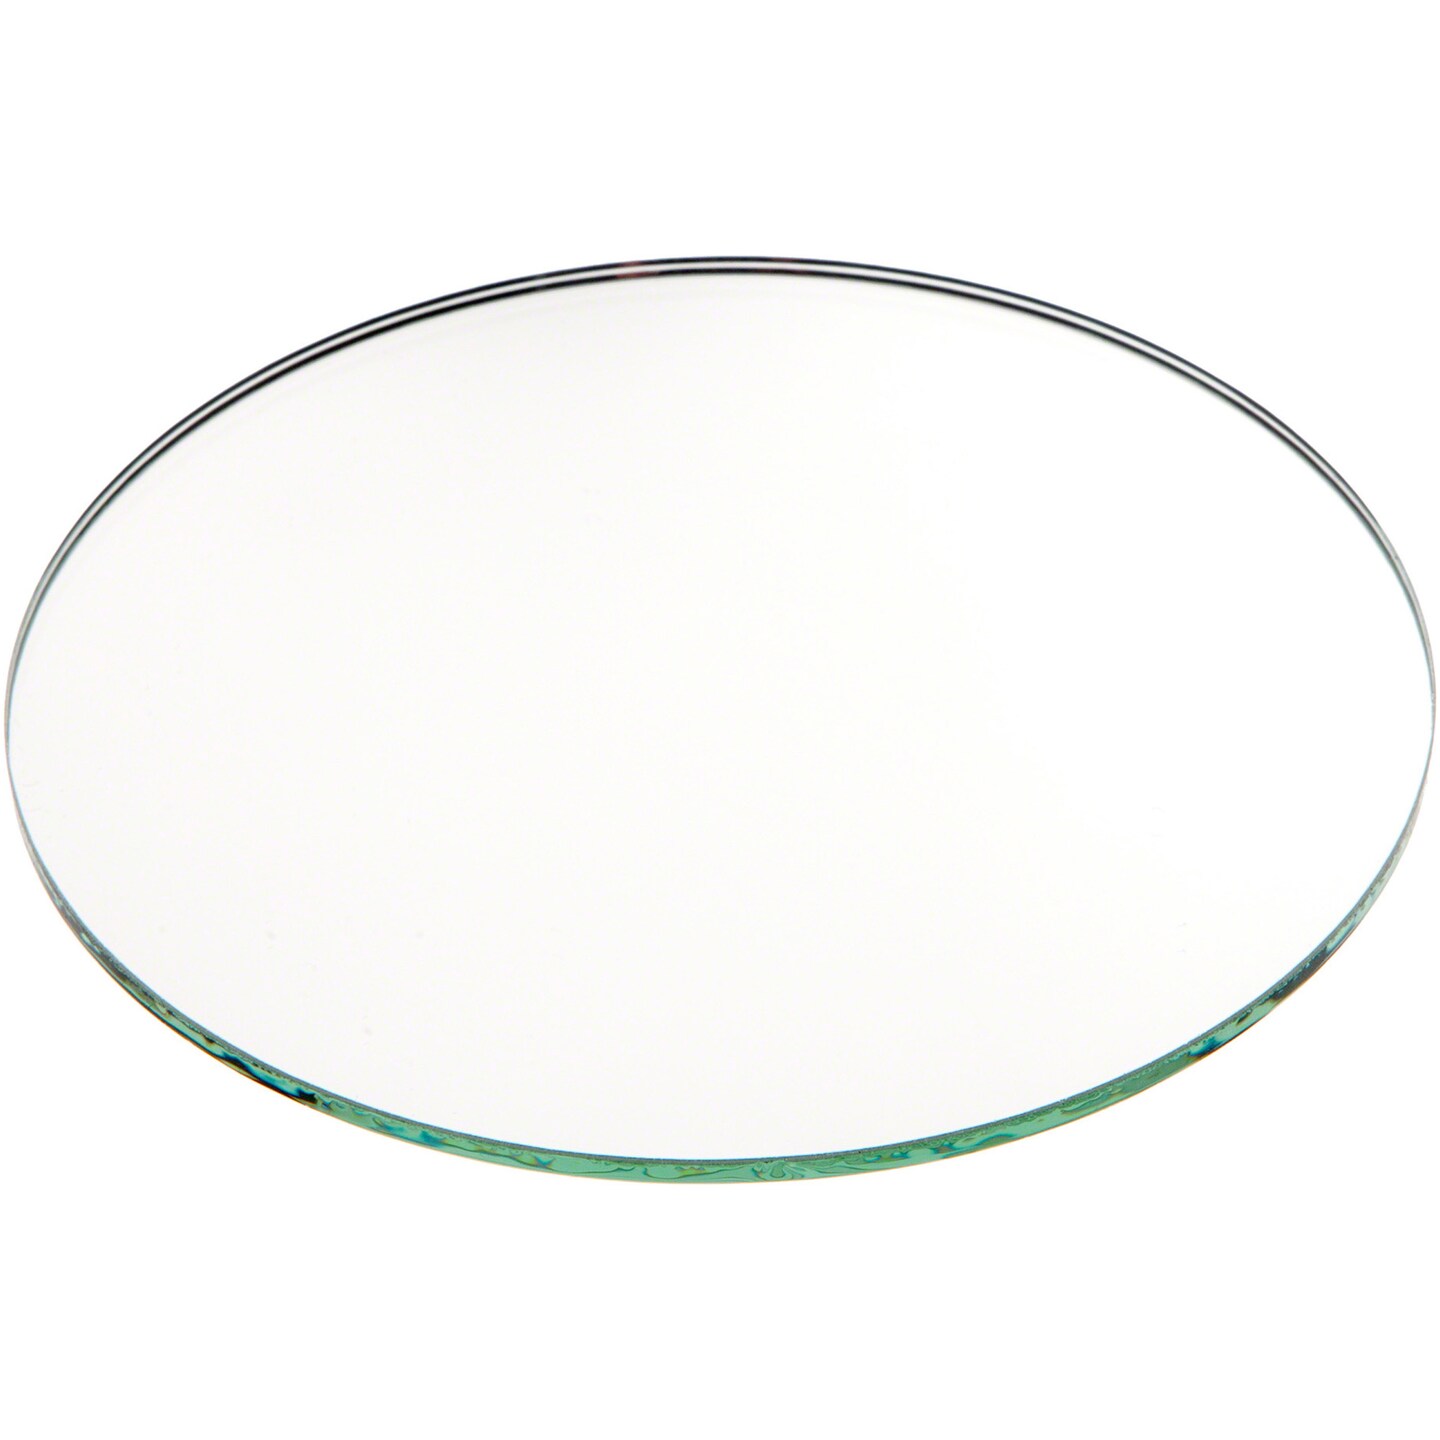 Plymor Round 3mm Non-Beveled Glass Mirror, 5 inch x 5 inch